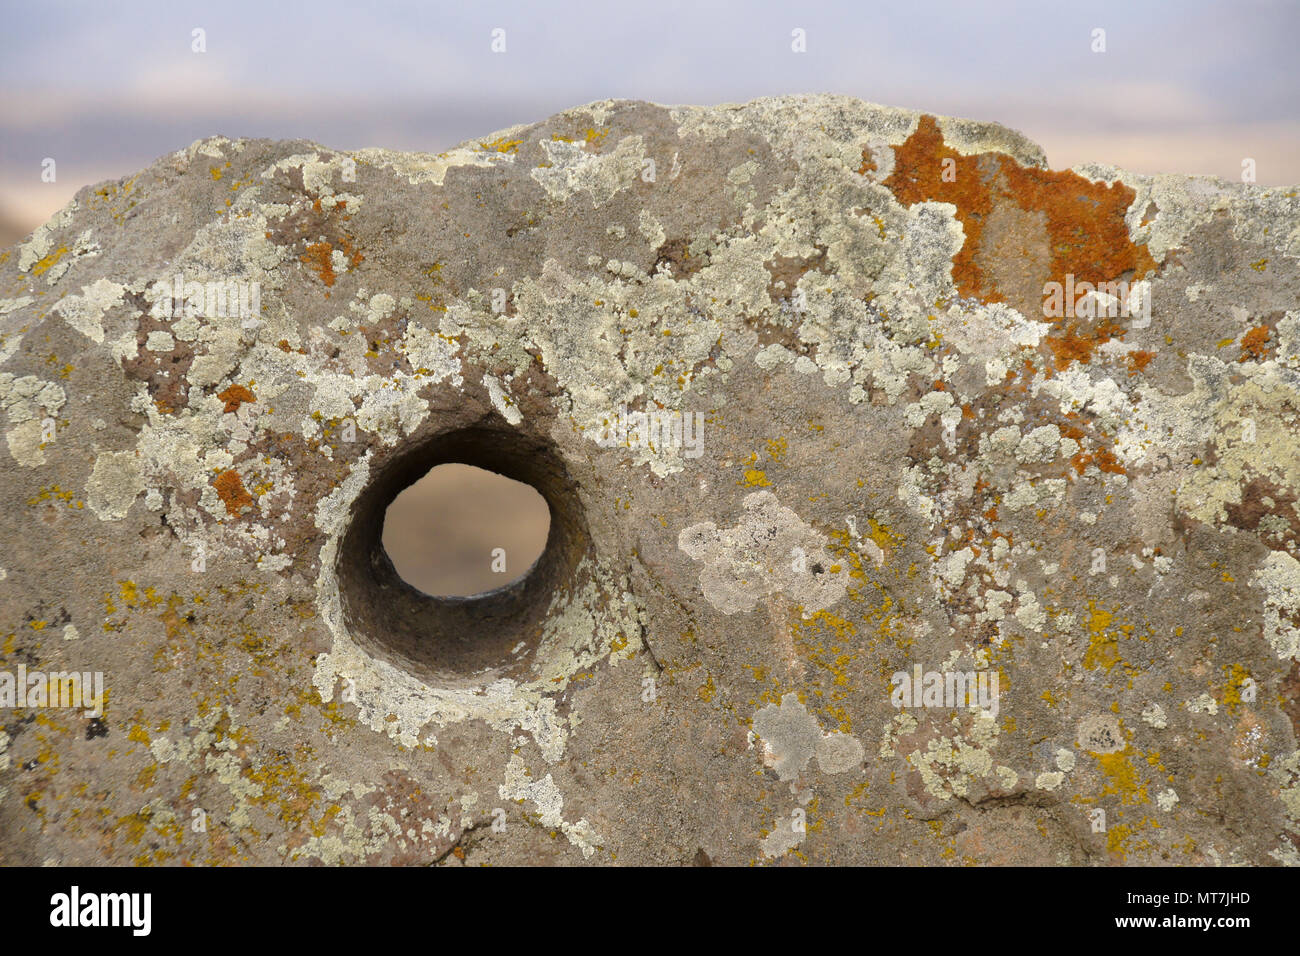 Liquen de roca incrustada con agujero aburrió, Carahunge Karahunj (Observatorio) cerca de la ciudad de Sisian, Armenia Foto de stock